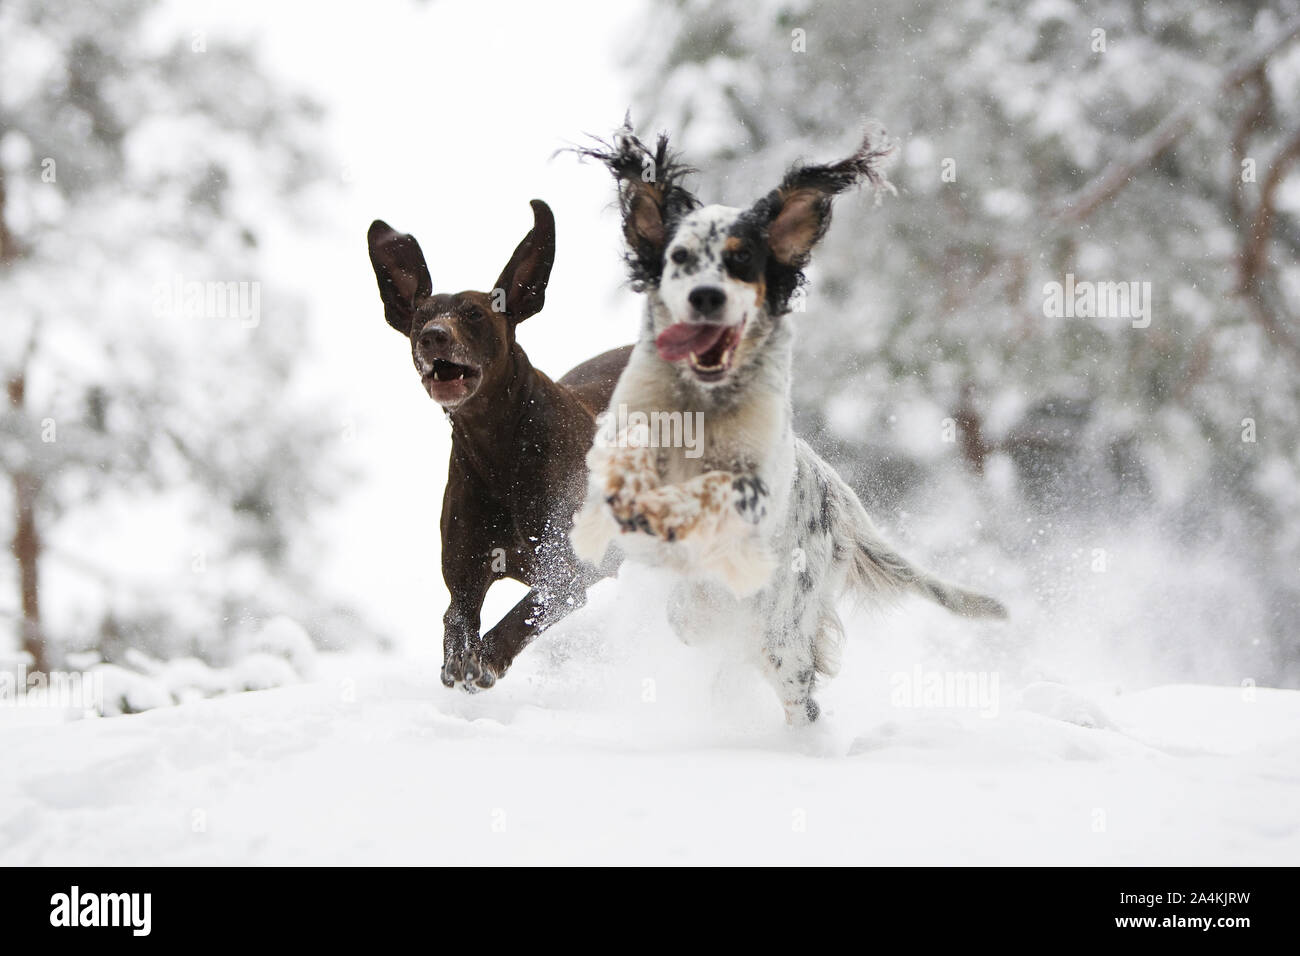 A Dog Runs In The Snow Stock Photo